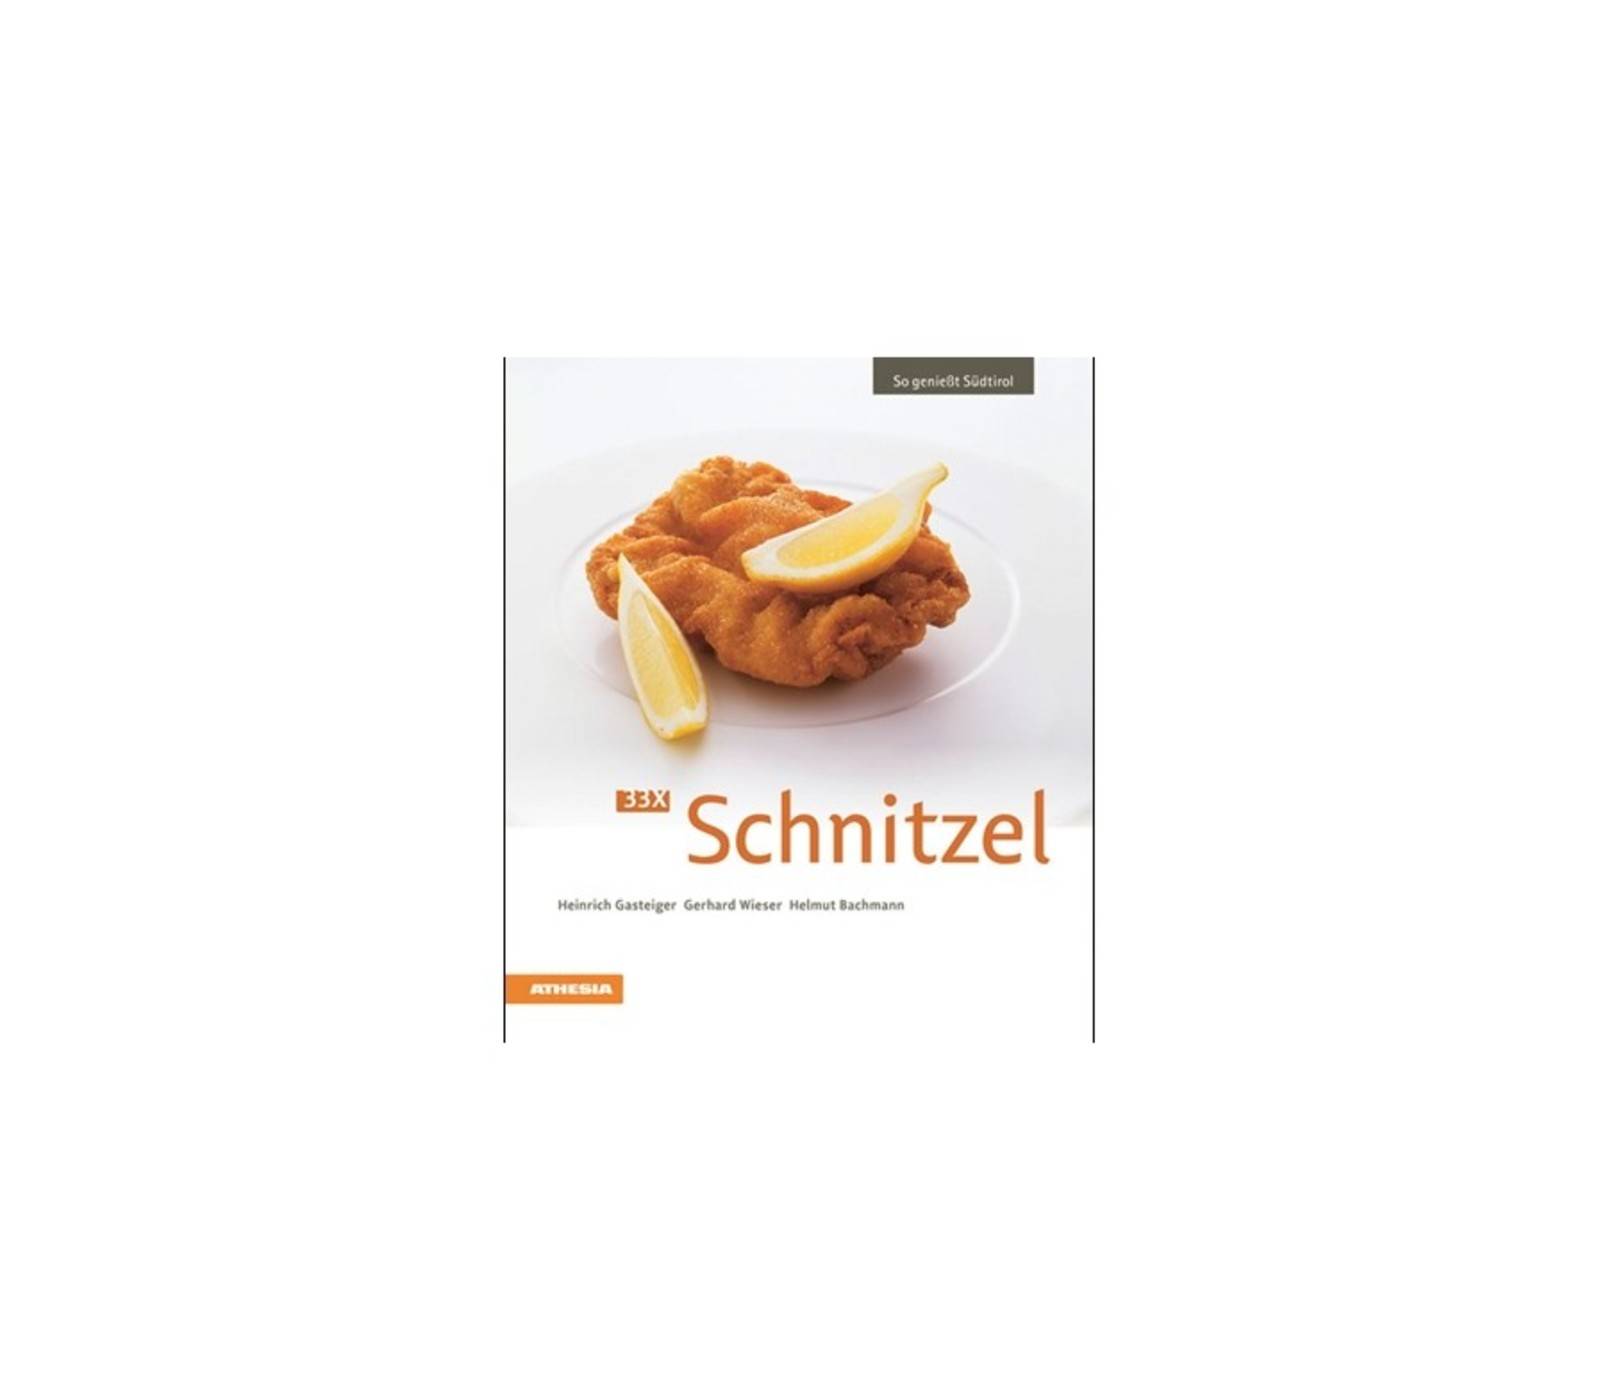 33x Schnitzel Buchcover